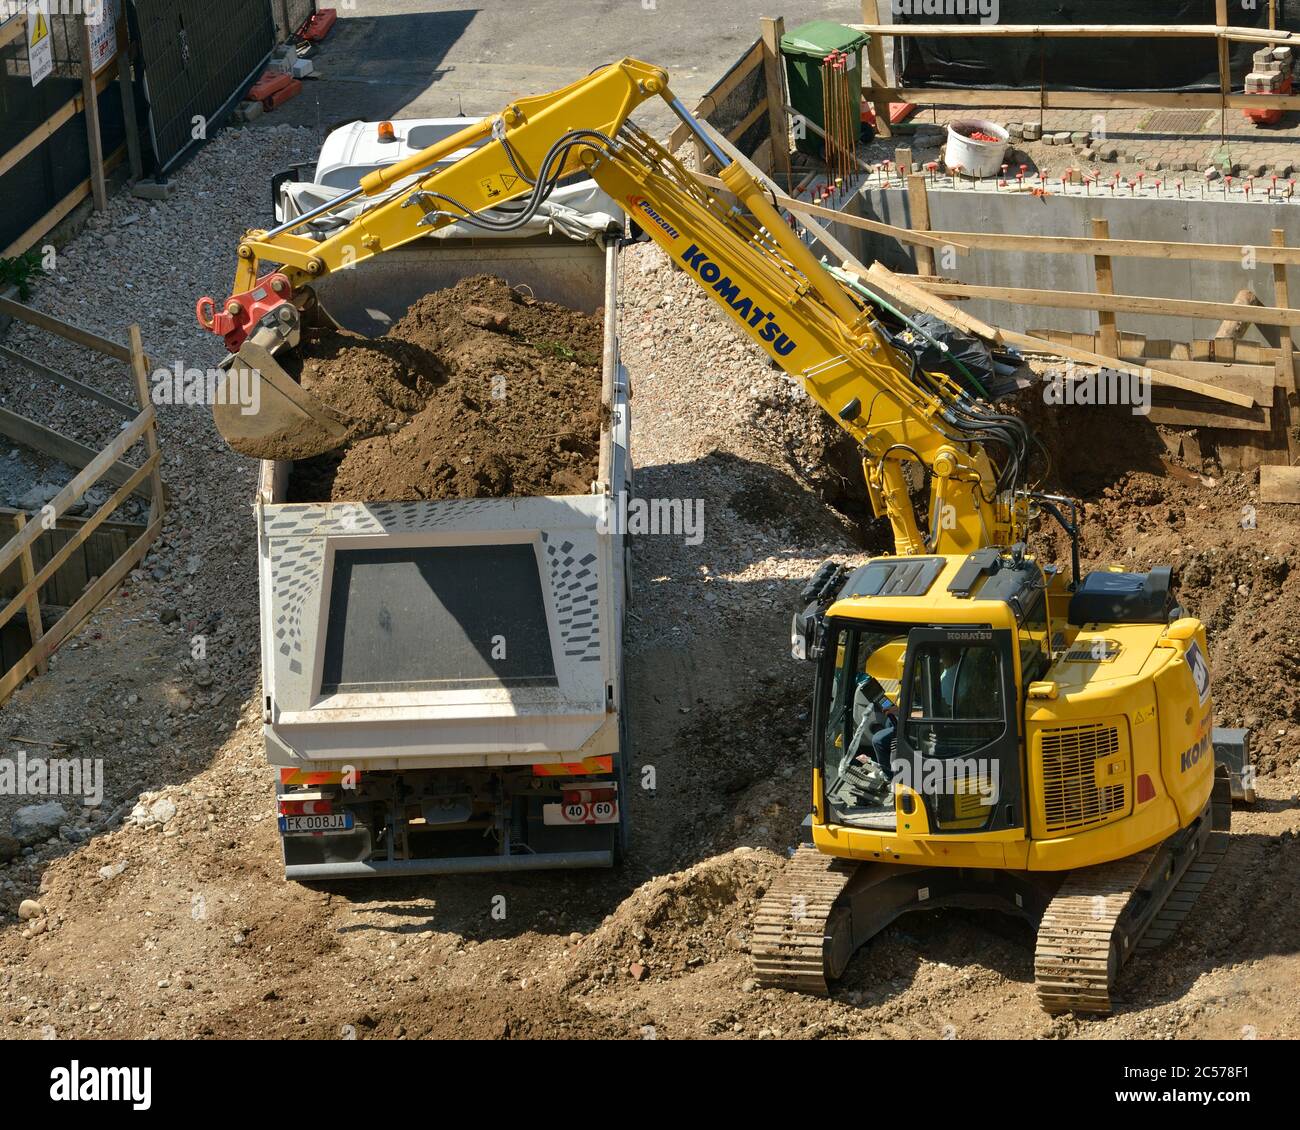 hydraulic excavator Komatsu digging building foundation, unloading soil into a dump truck Stock Photo